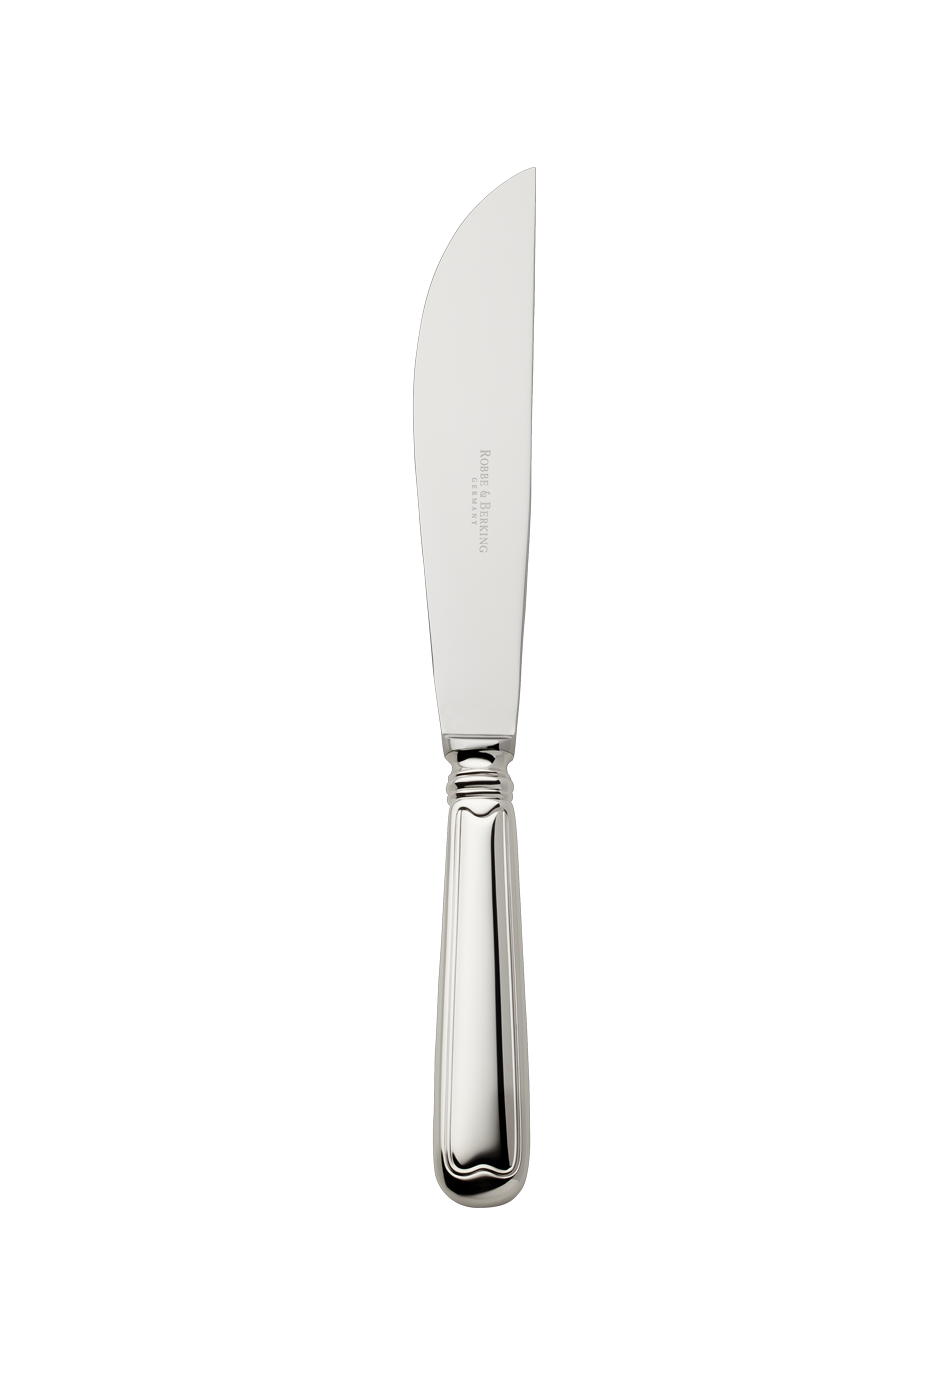 Alt-Faden Carving Knife (150g massive silverplated)